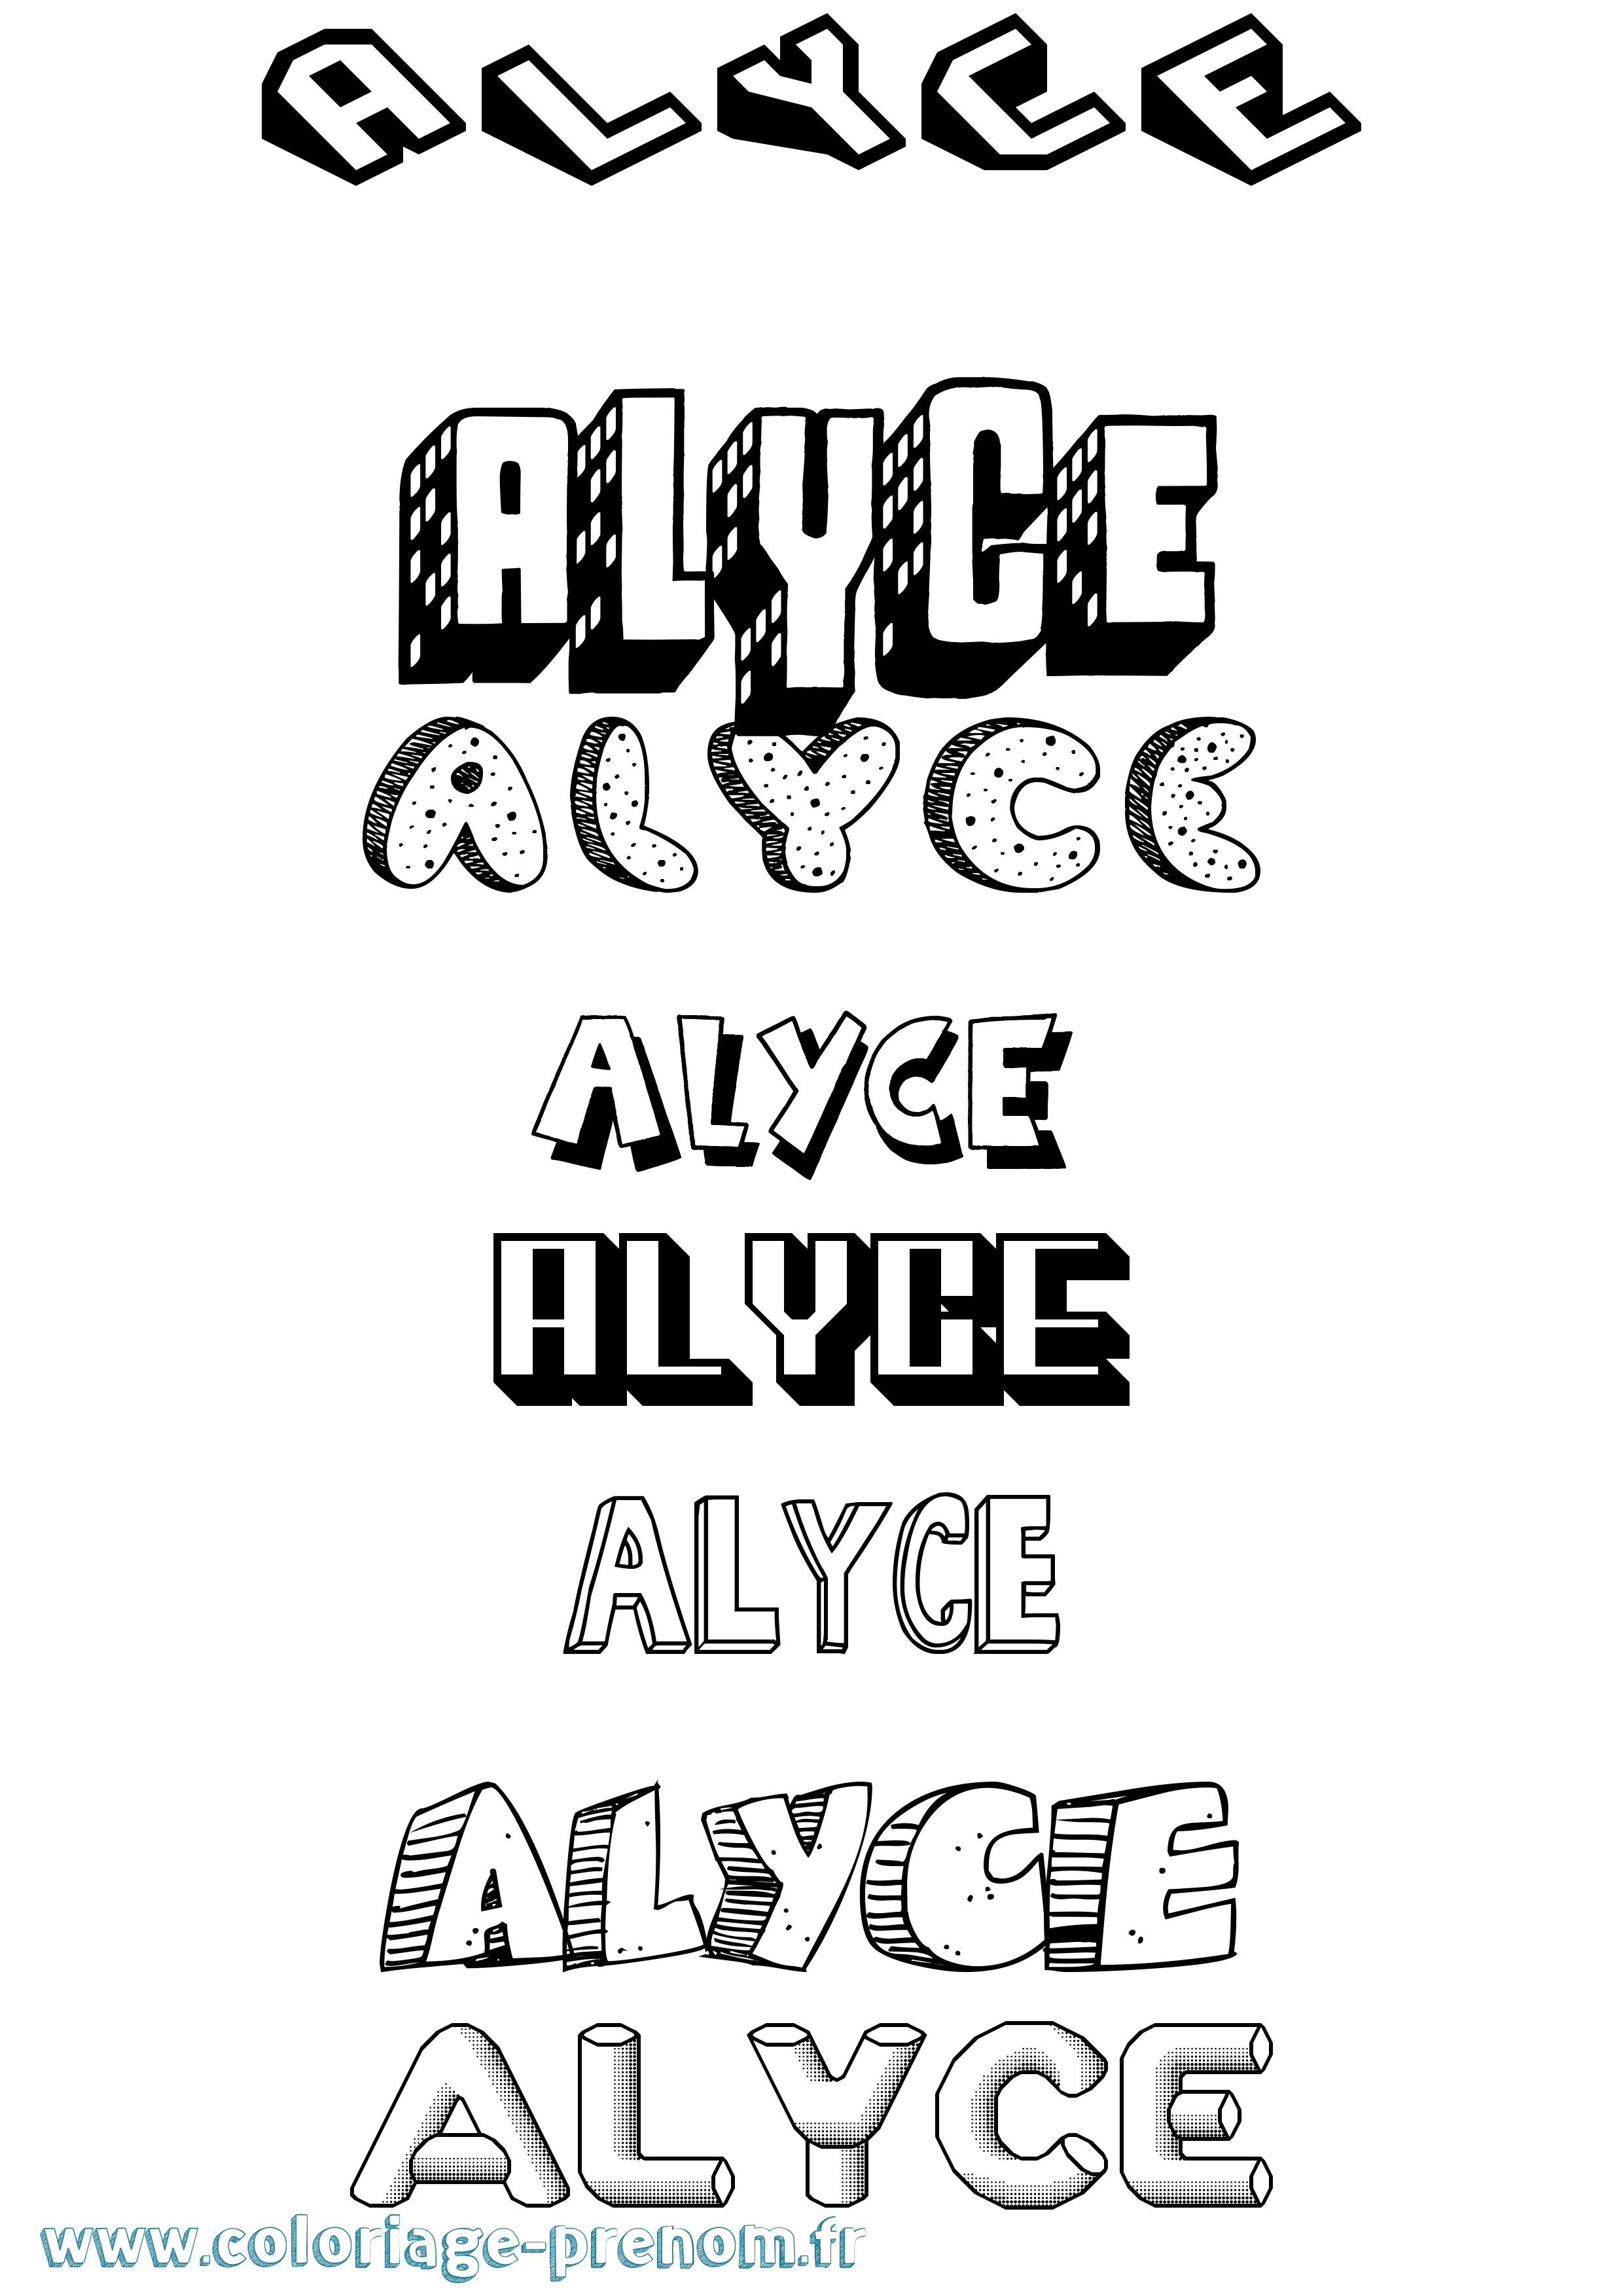 Coloriage prénom Alyce Effet 3D